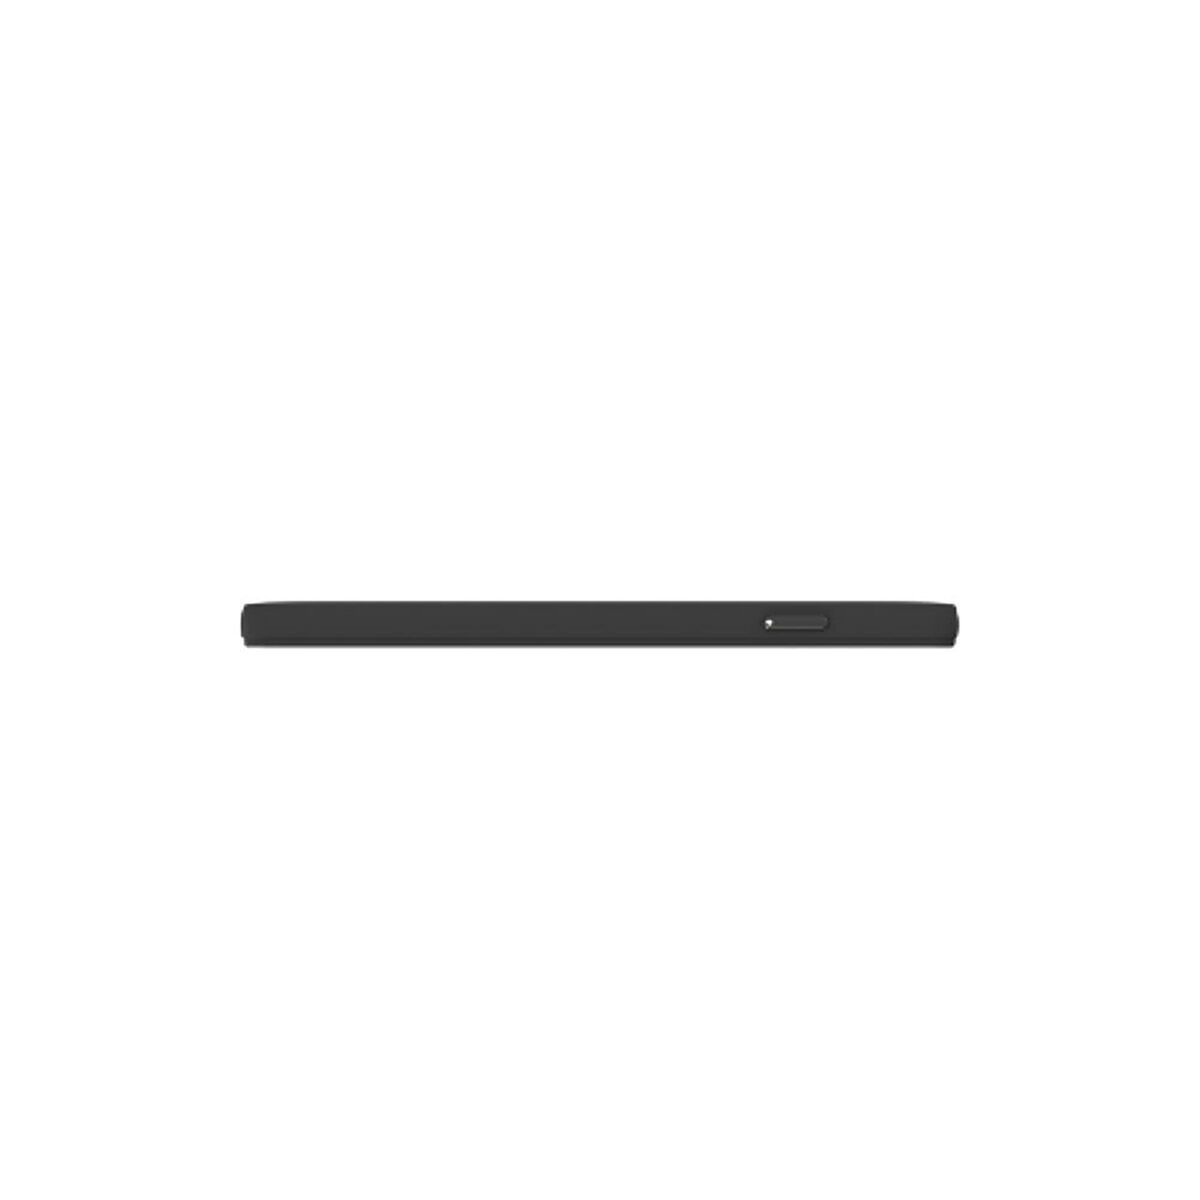 EBook Onyx Boox Poke 5 Black No 32 GB